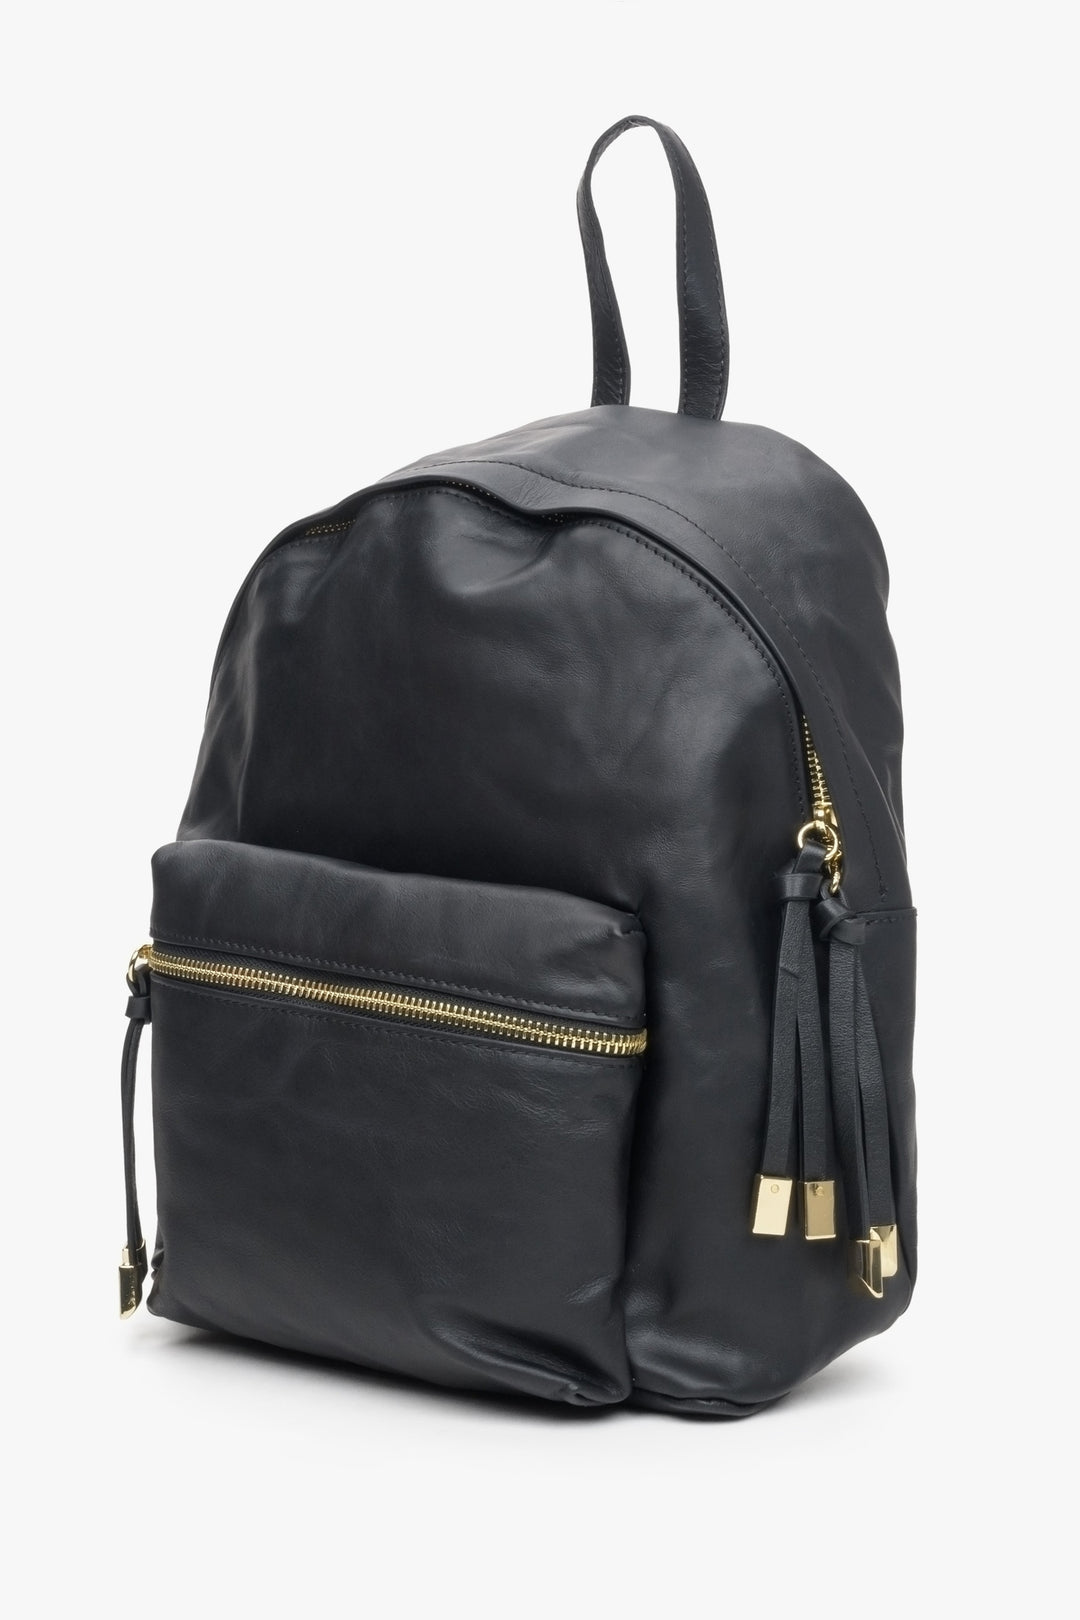 Black natural leather women'c backpack purse with golden details Estro.